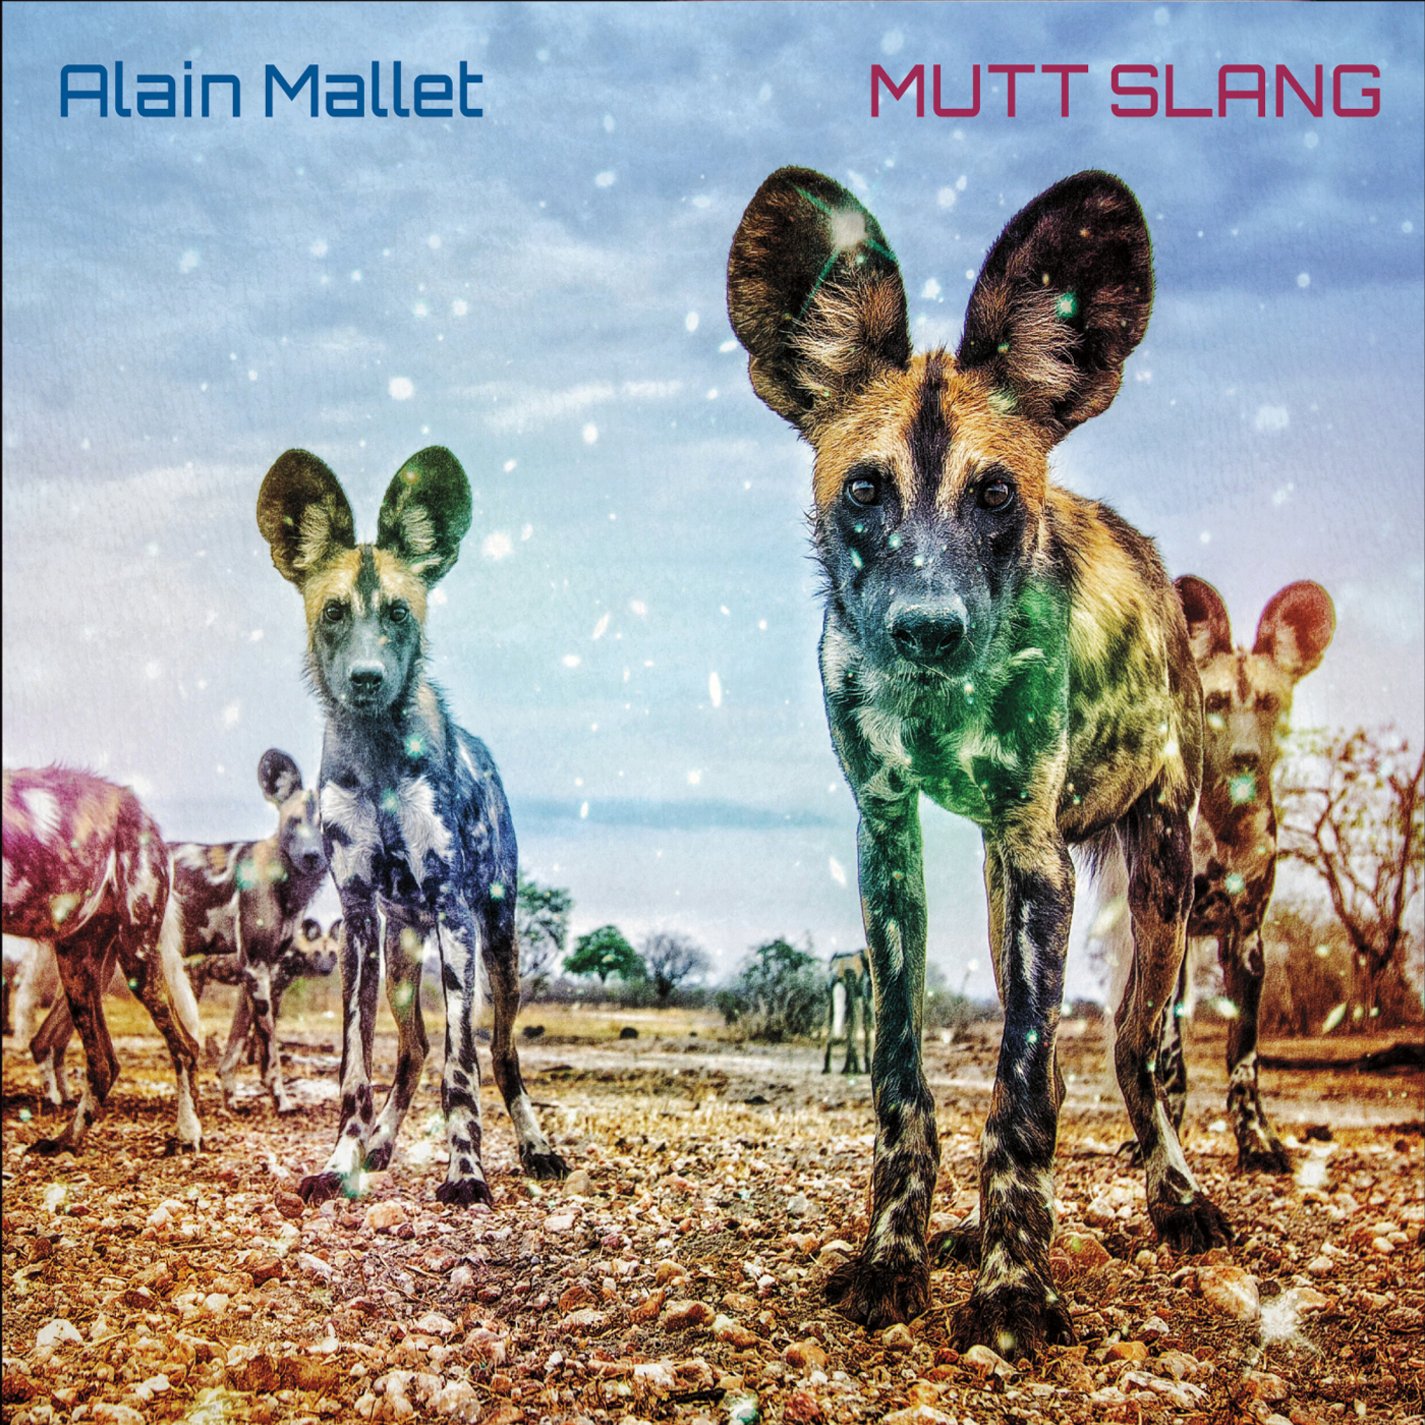 Alain Mallet "Mutt Slang", 2016